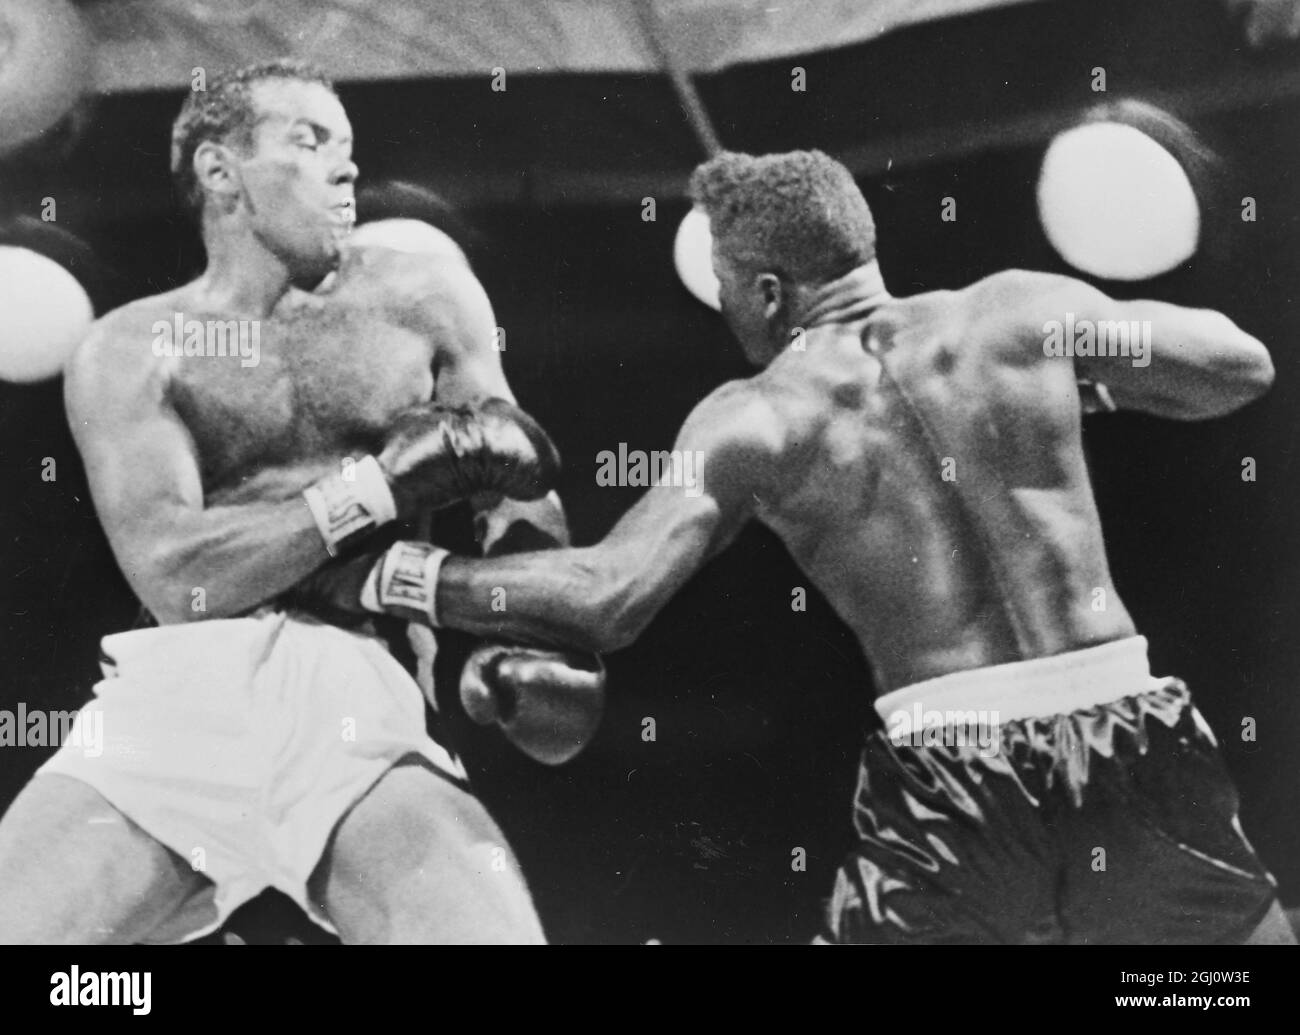 JOHANSSON I PATTERSON - BOXING FIGHT - 24 JUNE 1960 Stock Photo